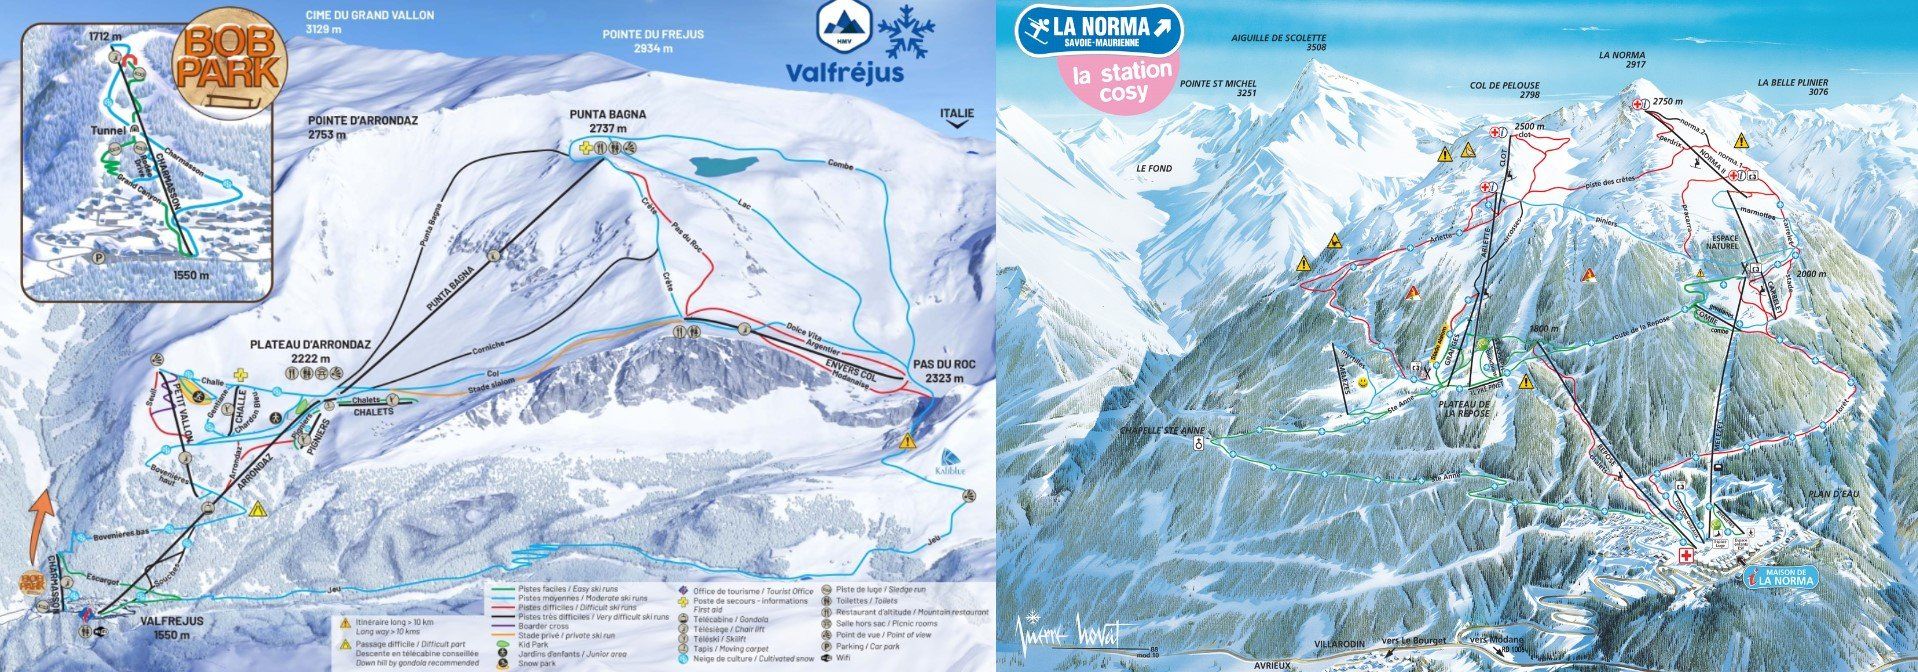 Pistenplan / Karte Skigebiet La Norma, Frankreich